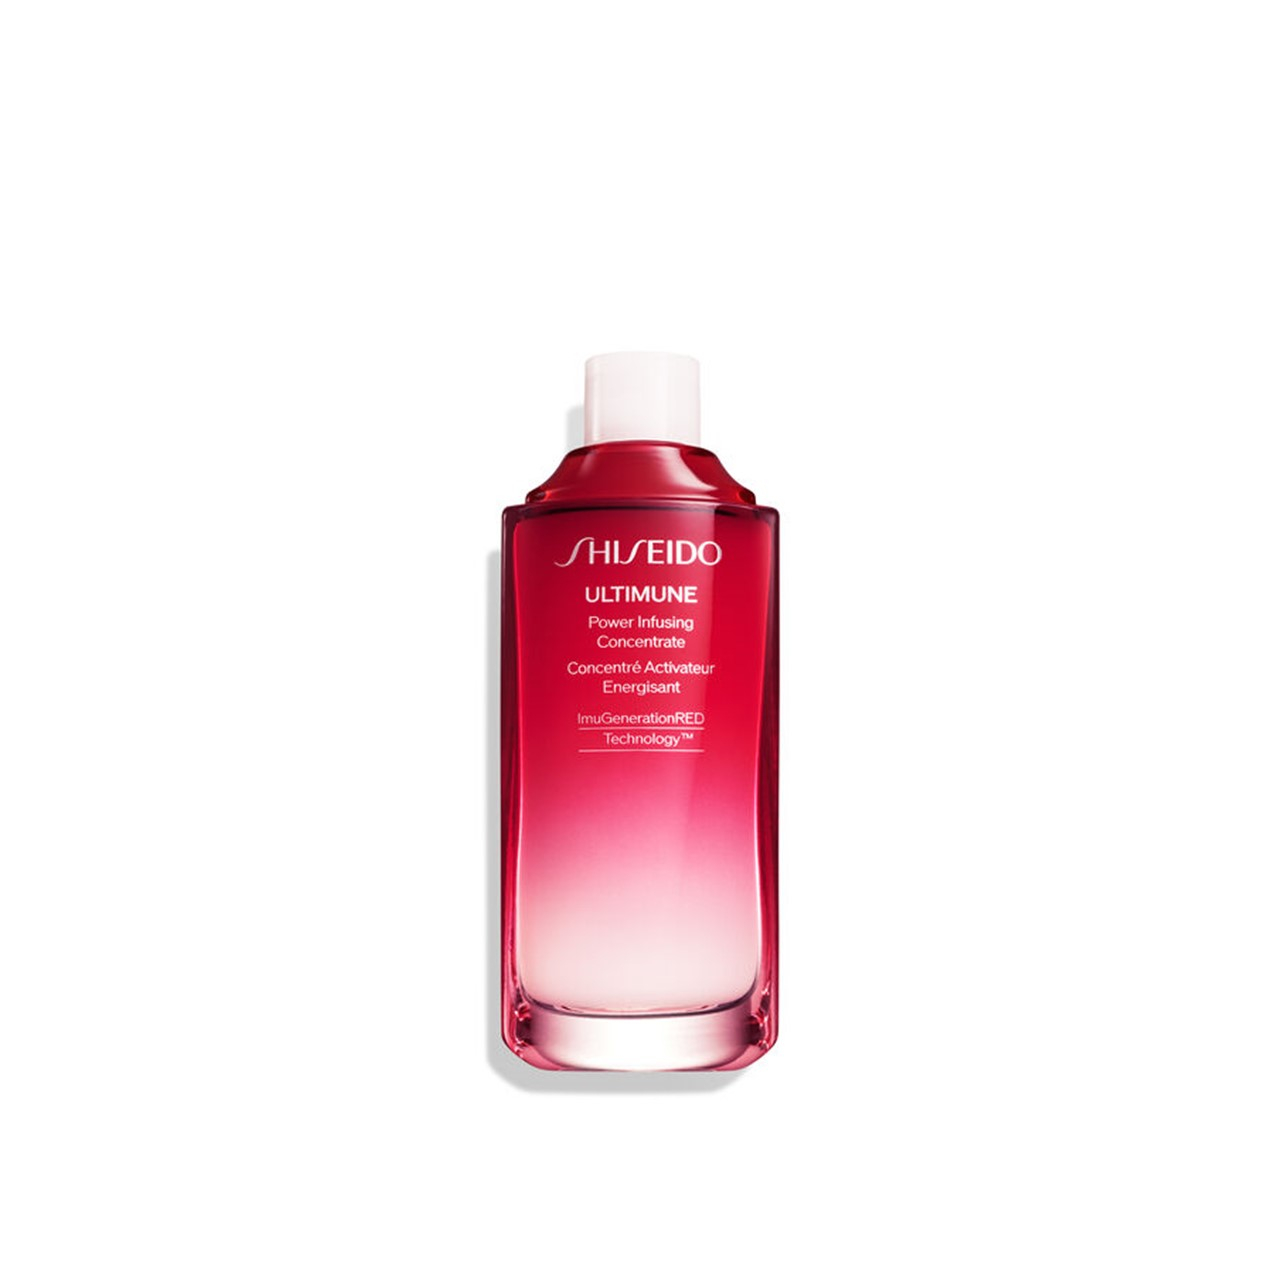 Shiseido Ultimune Power Infusing Concentrate Serum Refill 75ml (2.54fl oz)